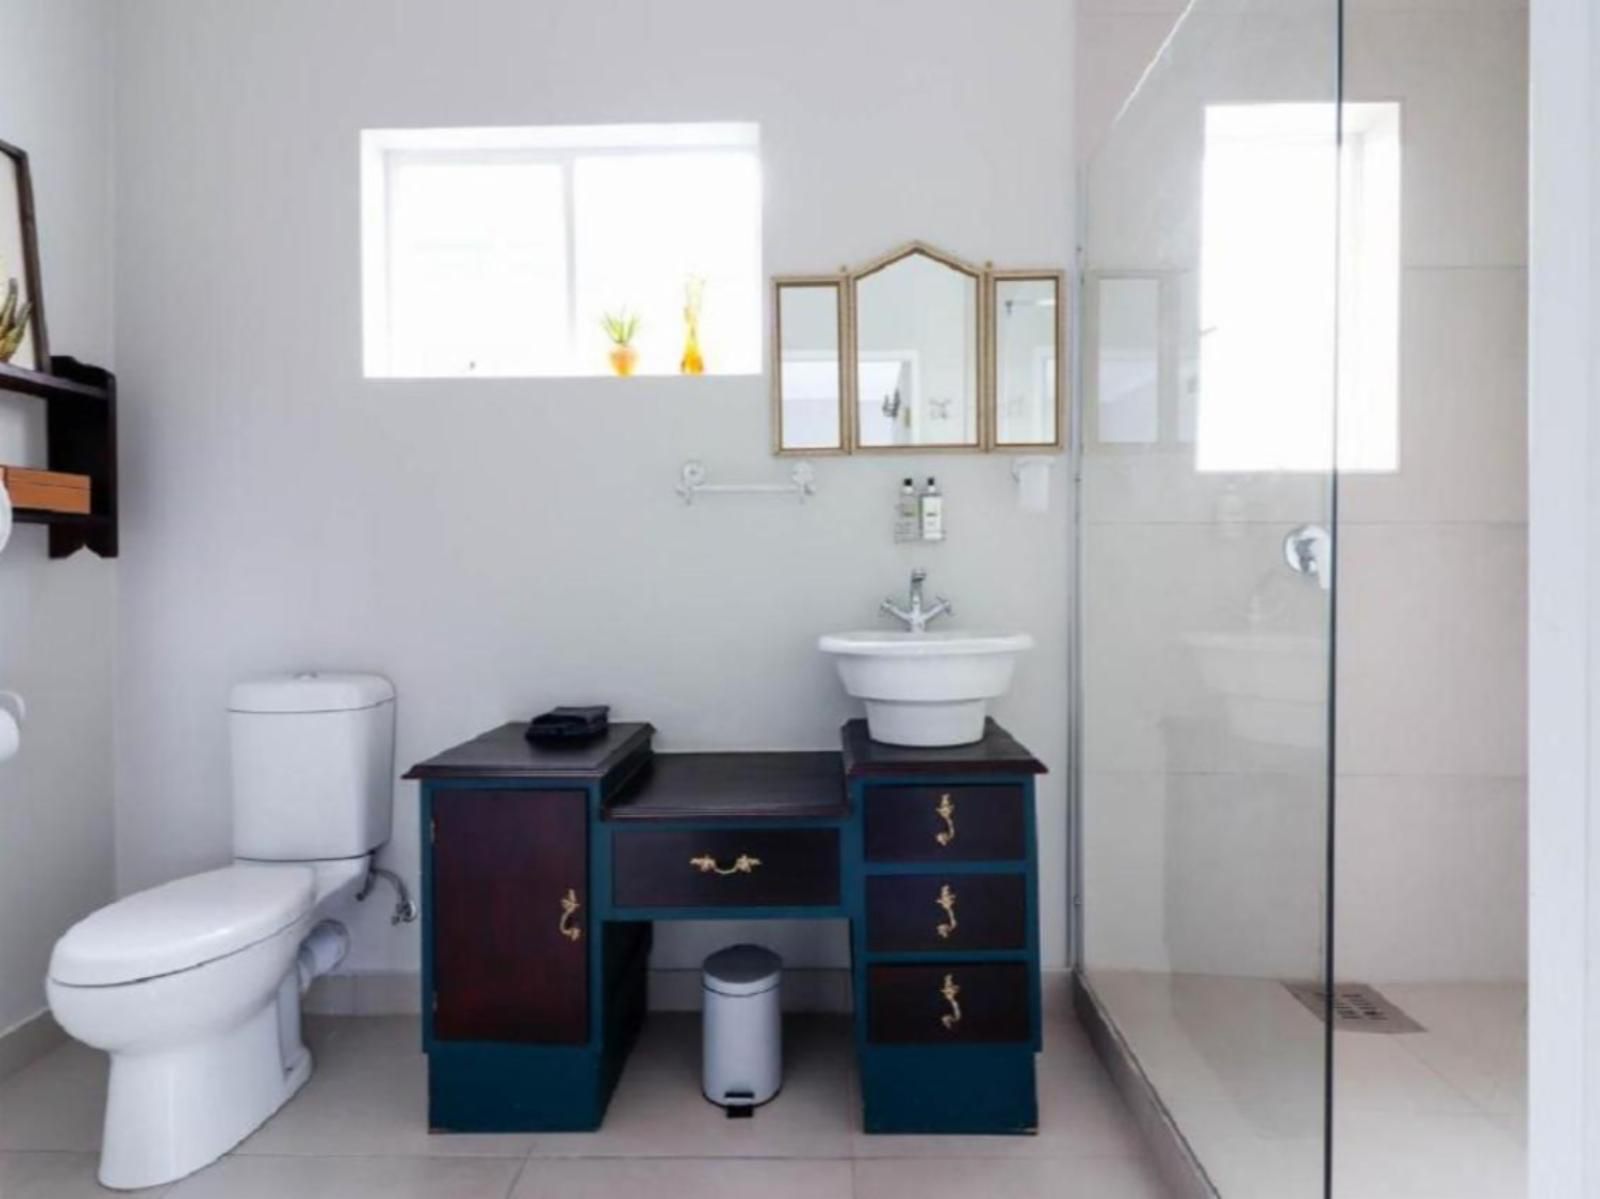 Arbour1 Heatherlands George Western Cape South Africa Unsaturated, Bathroom